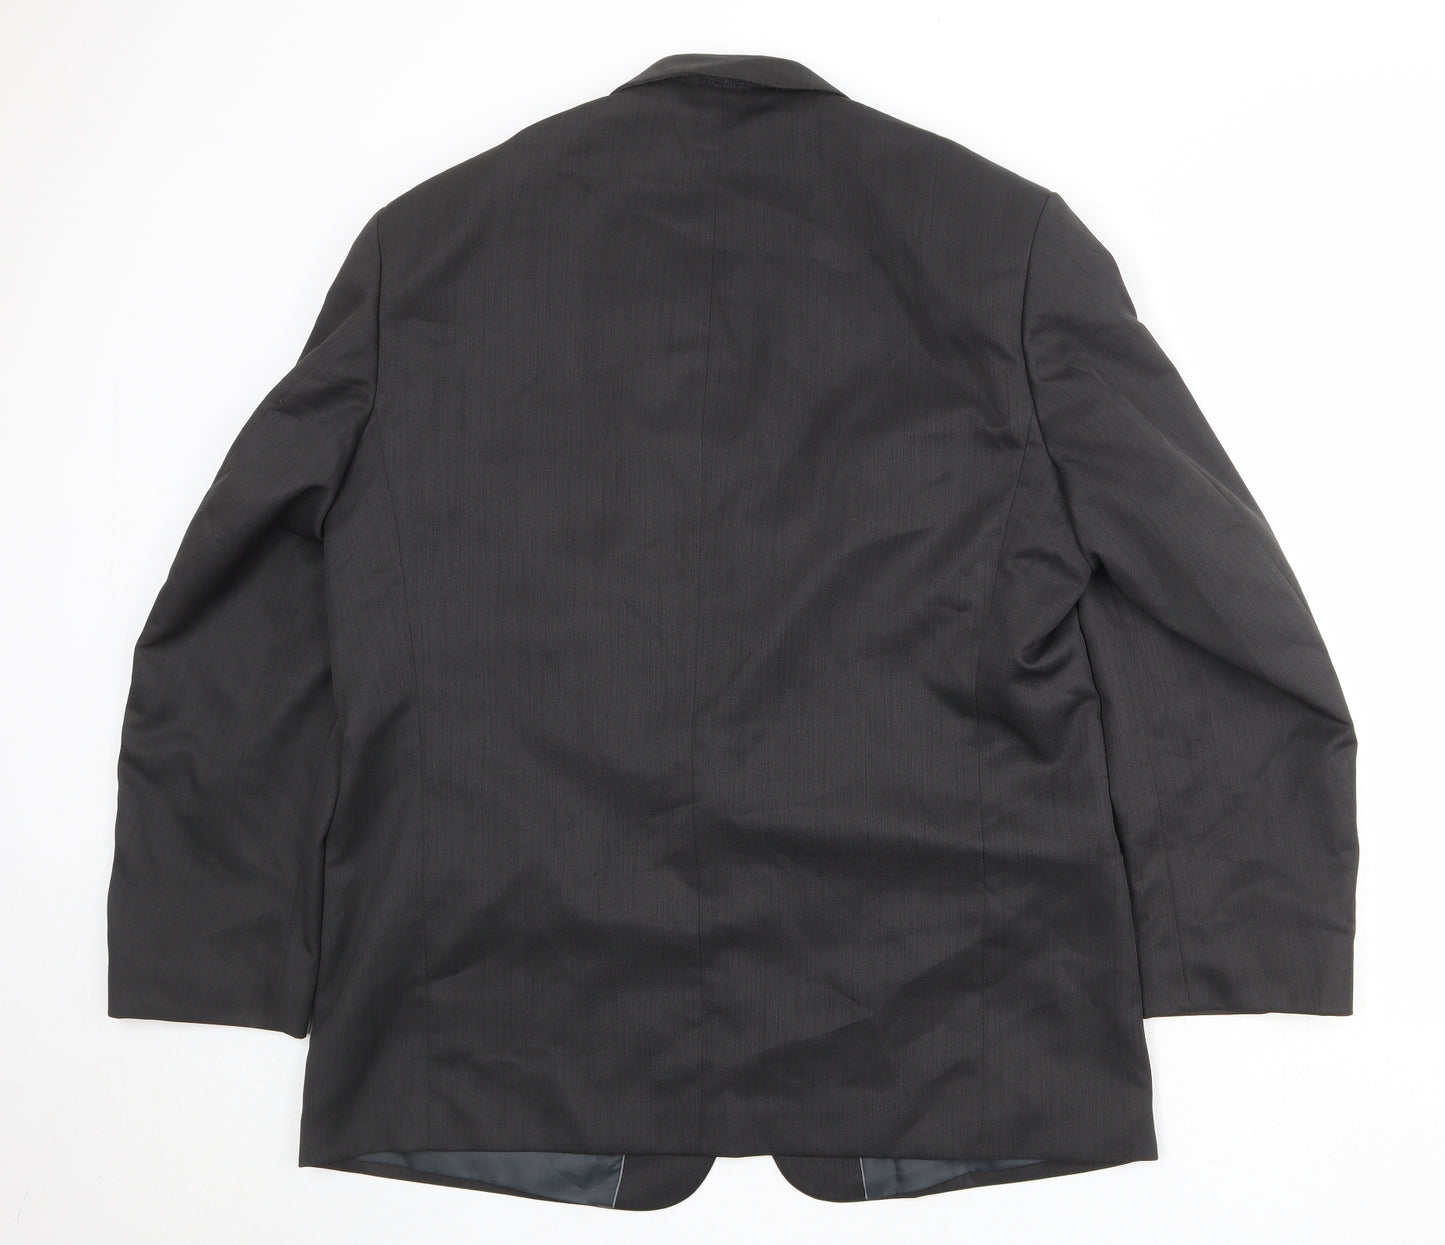 Armando Mens Grey Polyester Jacket Suit Jacket Size 46 Regular